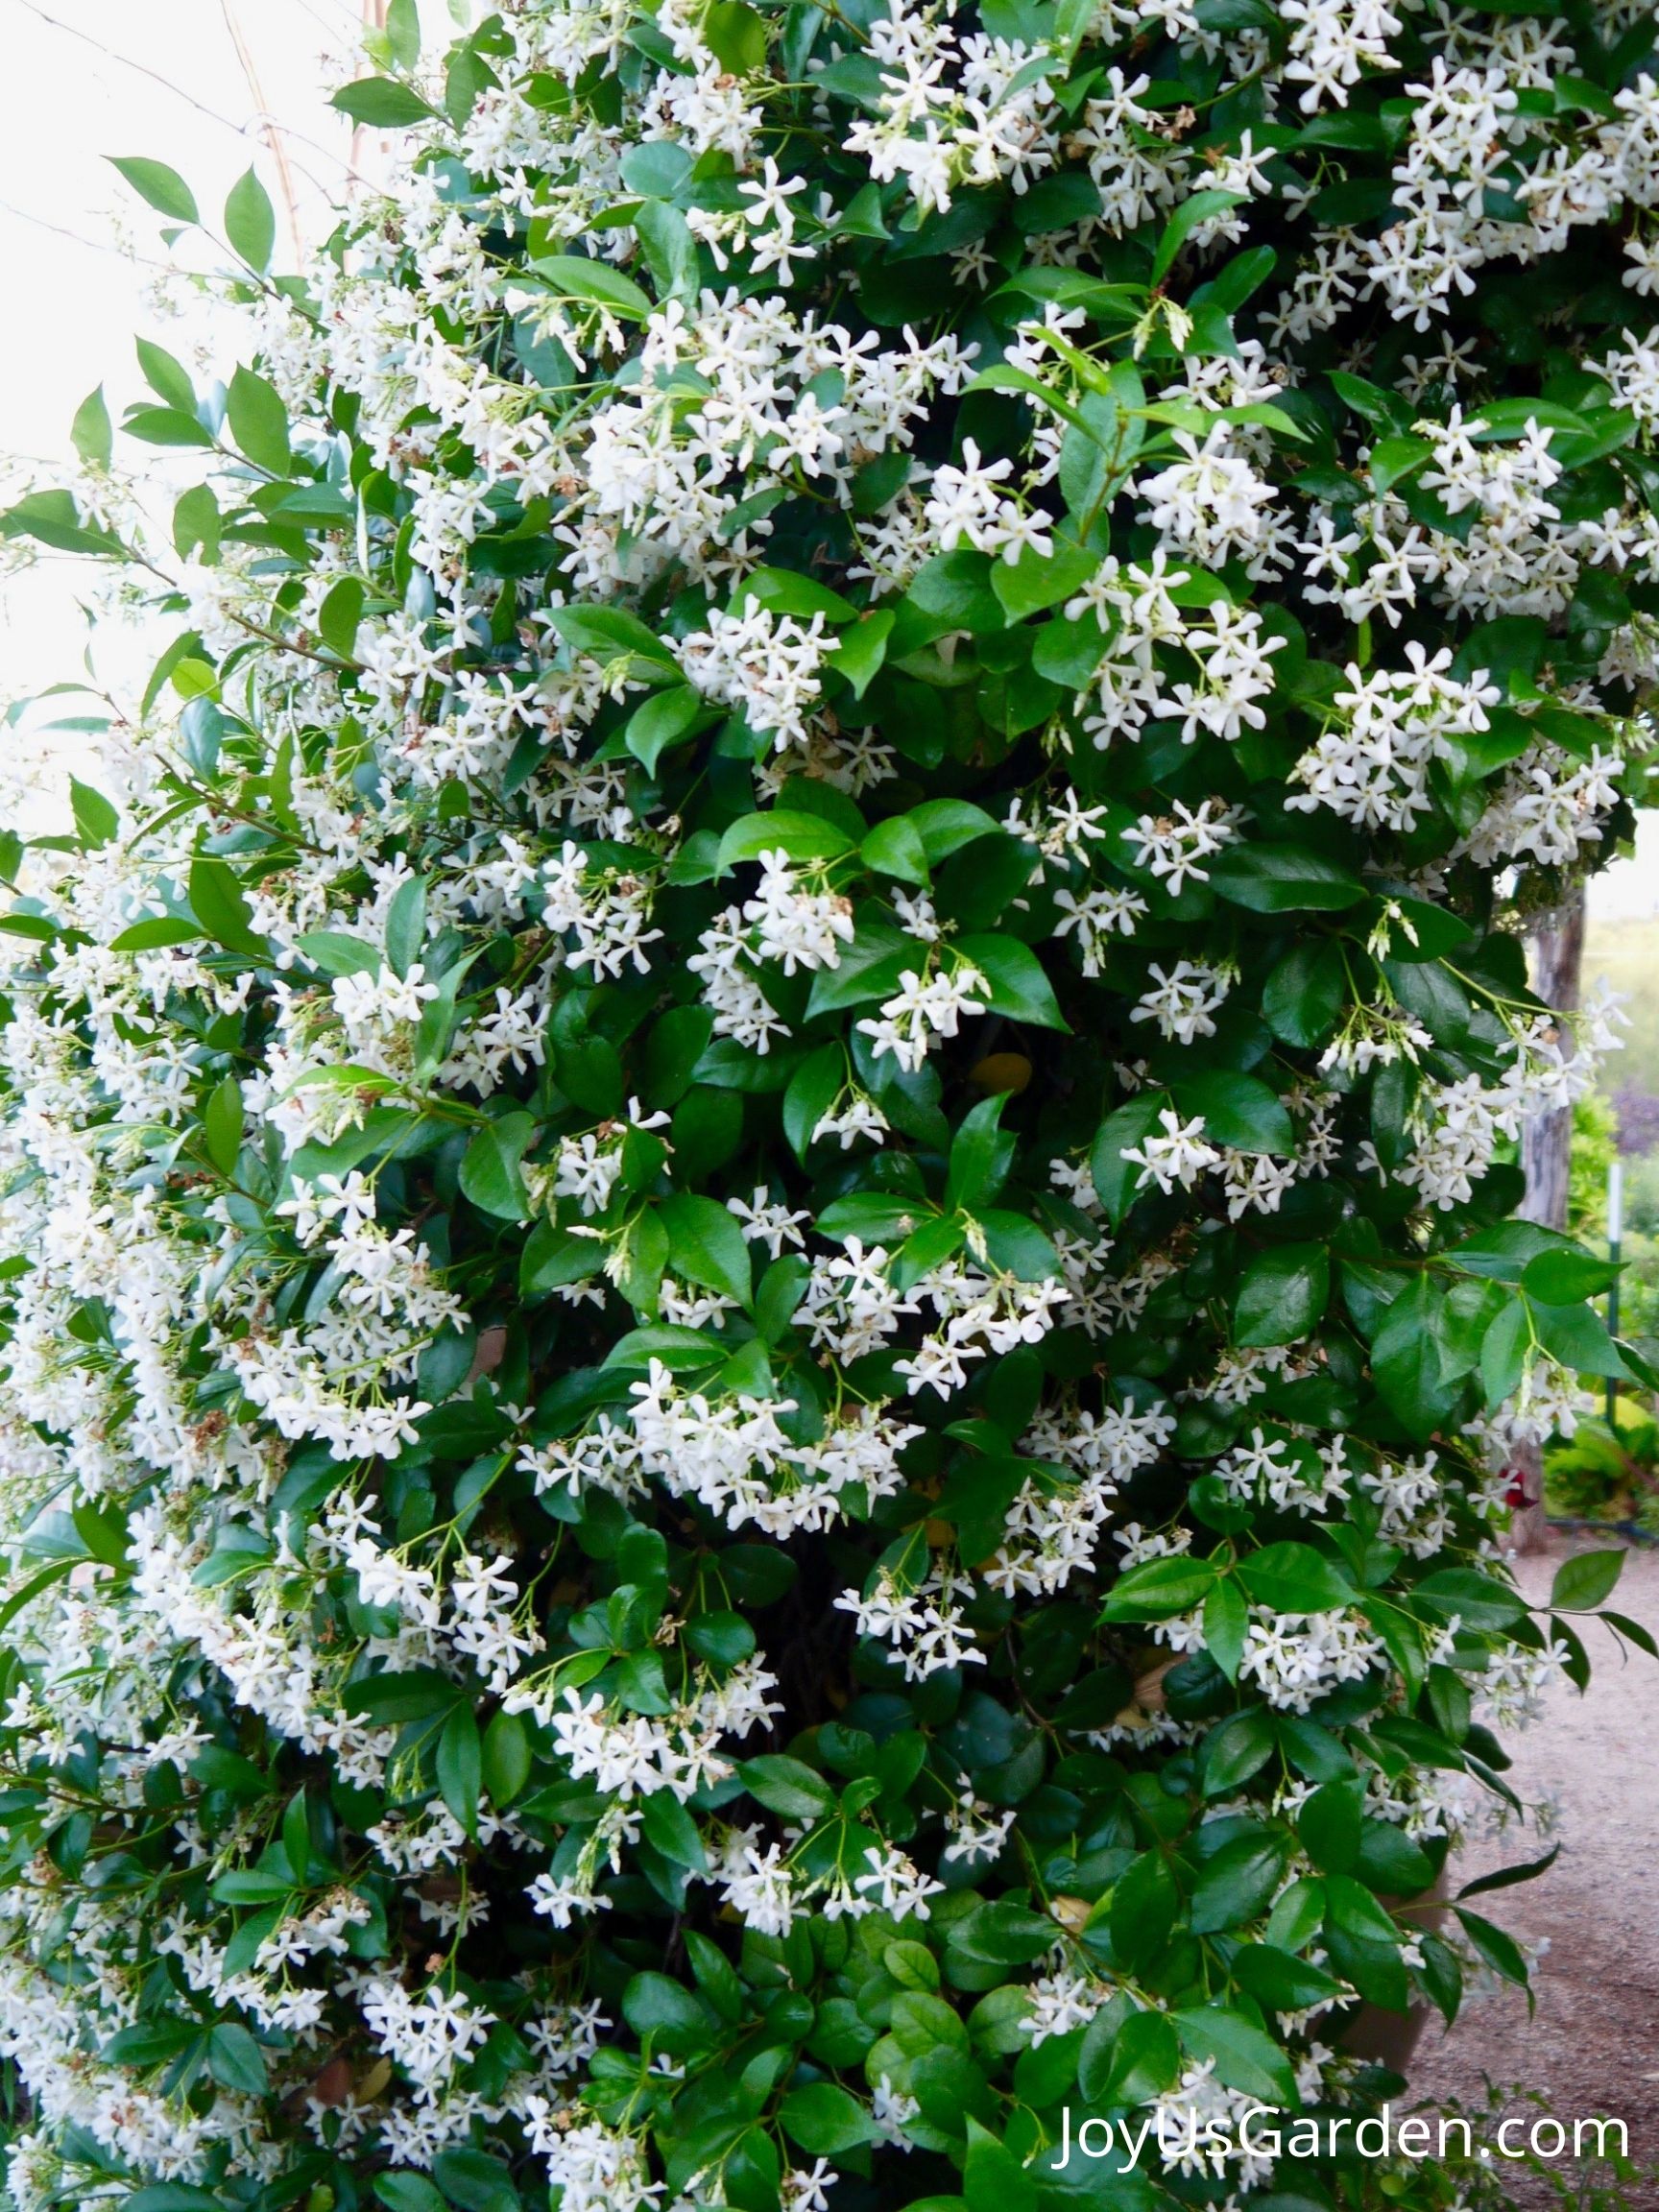 star jasmine in bloom growing on an arbor